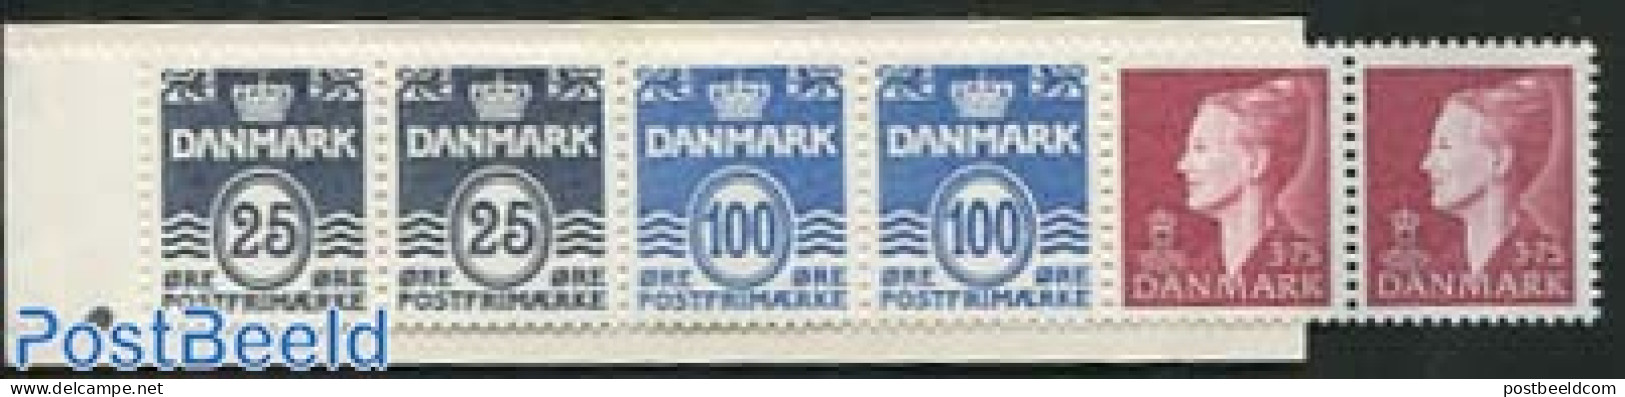 Denmark 1997 Definitives Booklet, Mint NH - Unused Stamps